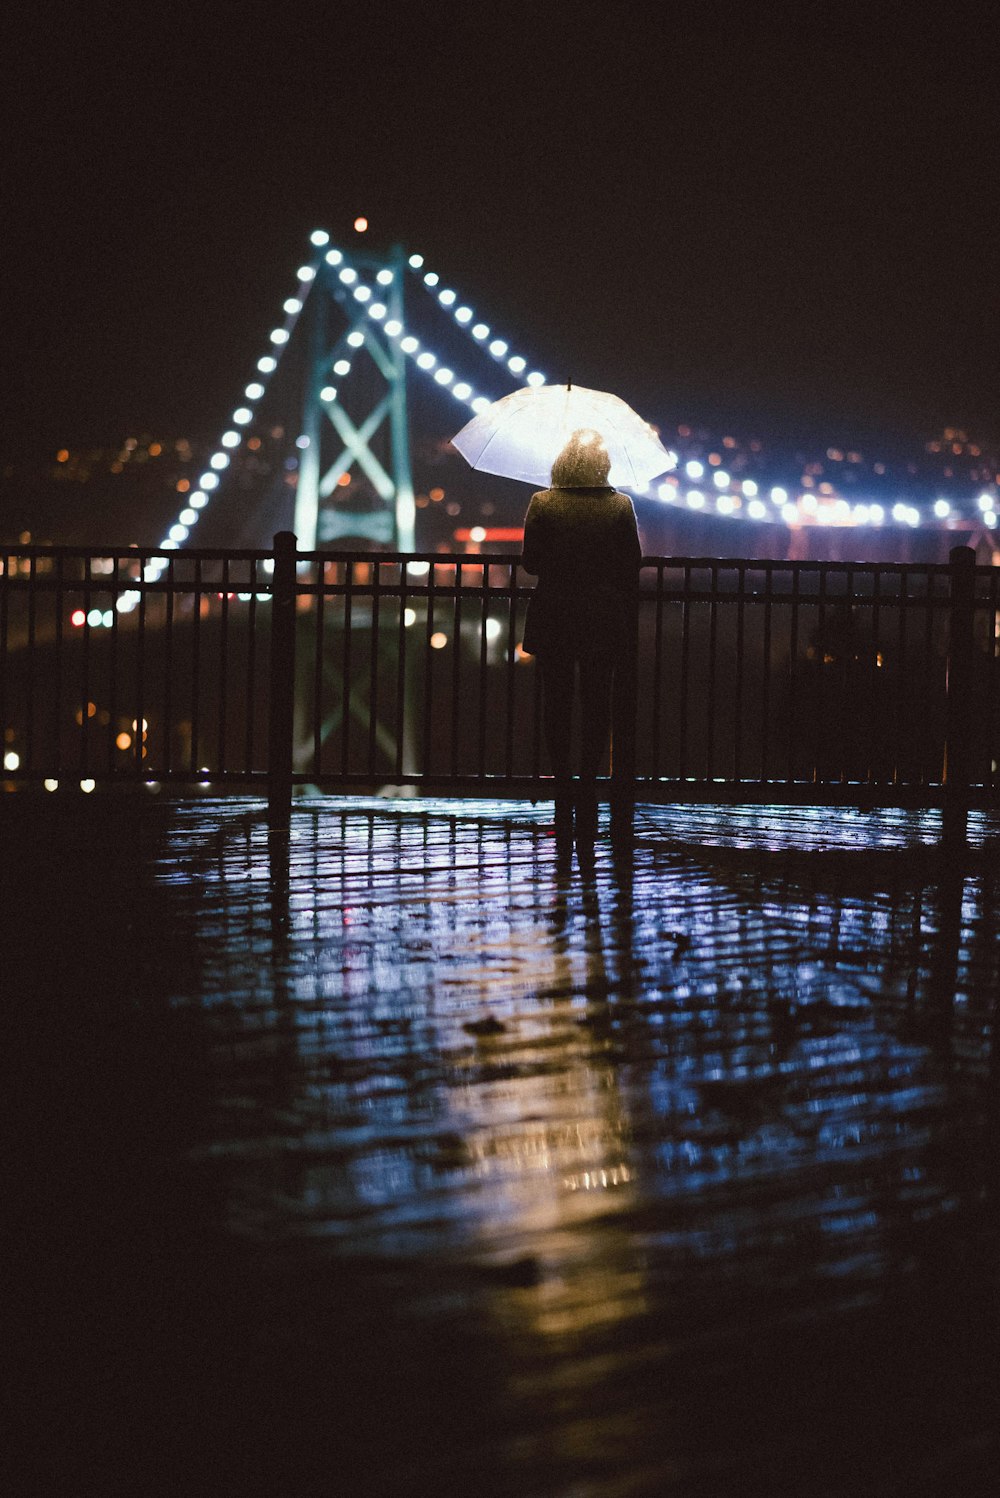 a person standing on a bridge holding an umbrella